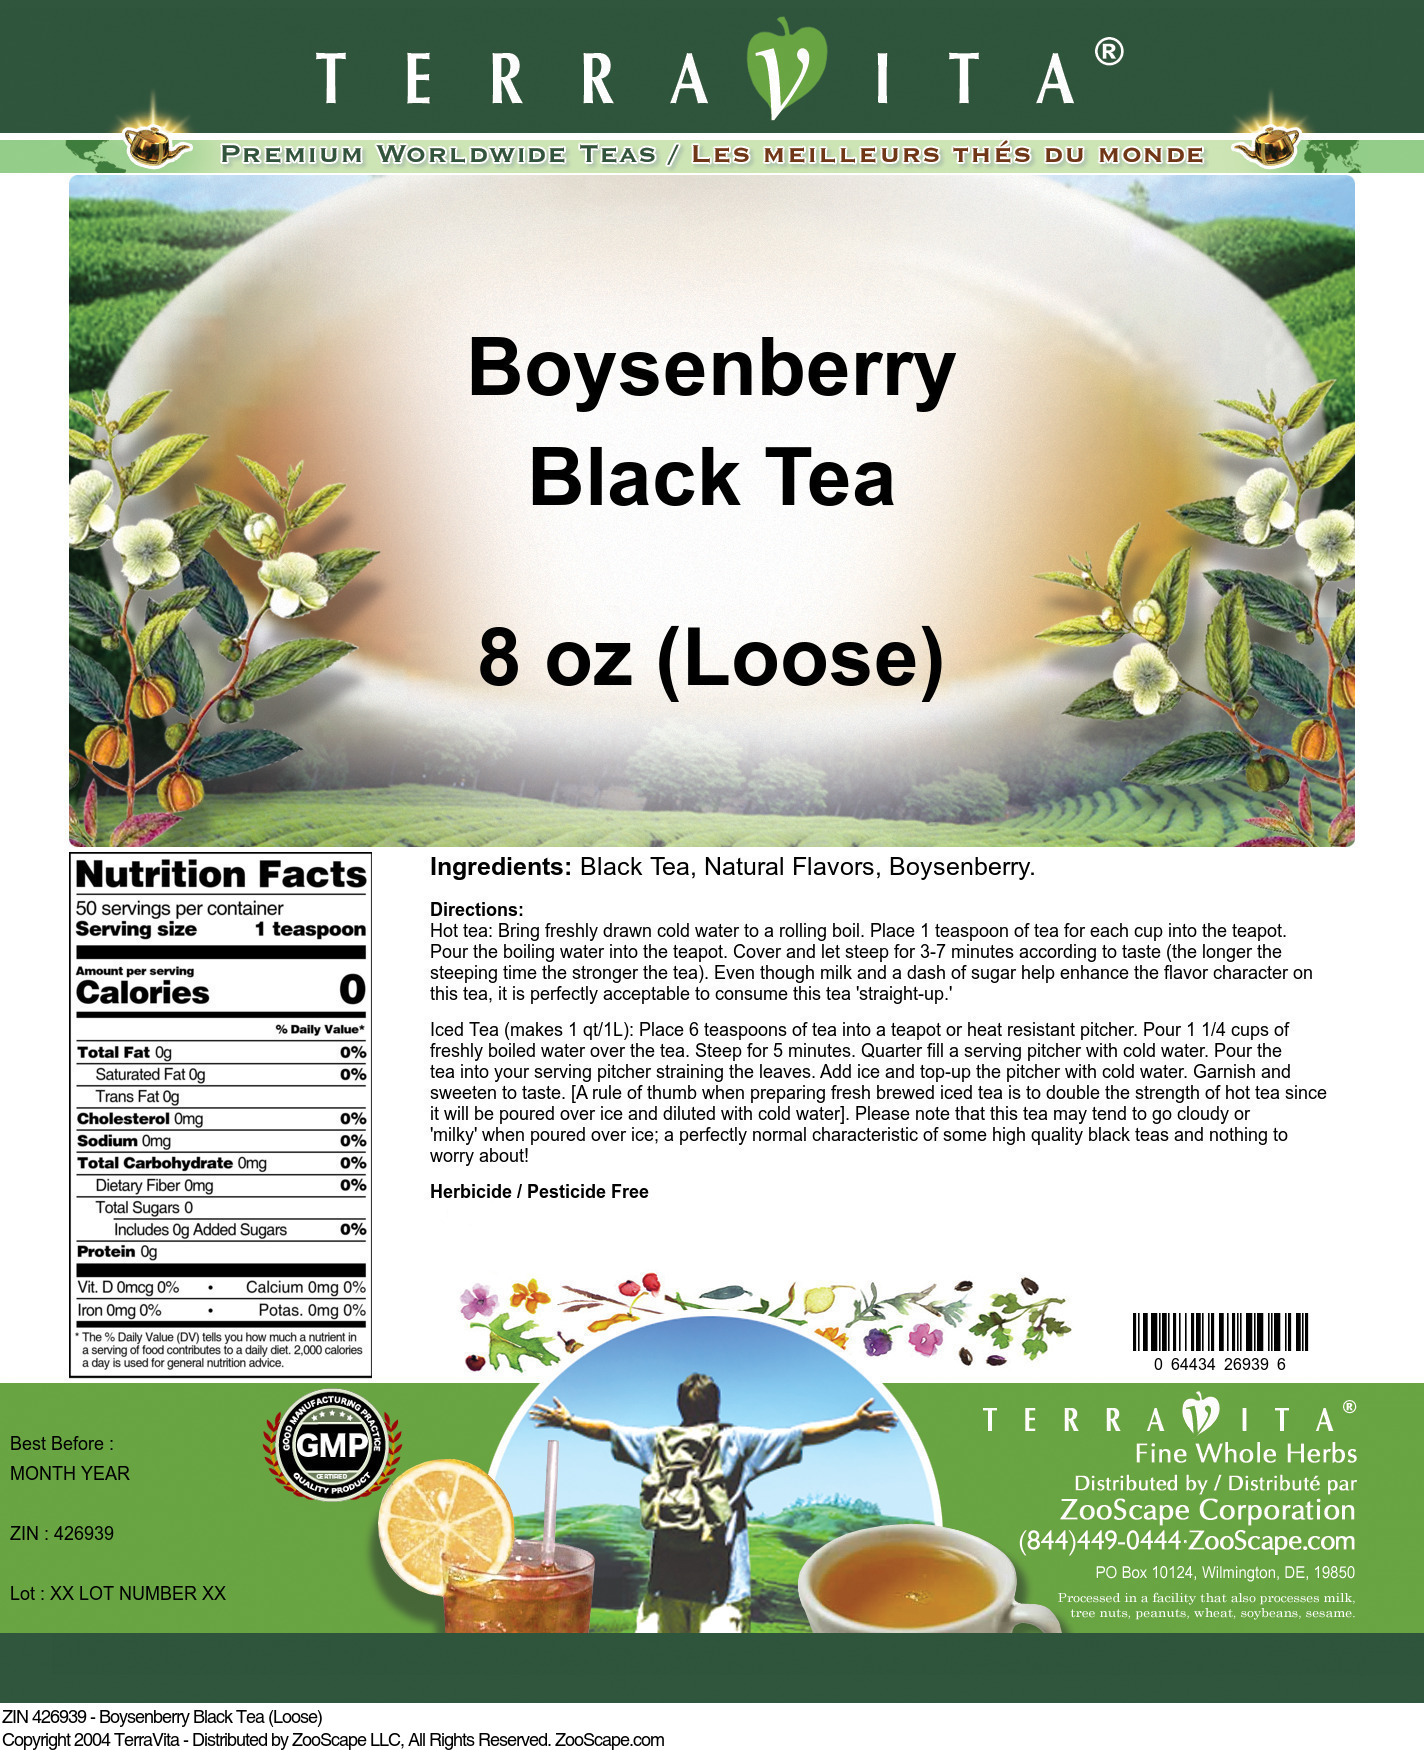 Boysenberry Black Tea (Loose) - Label